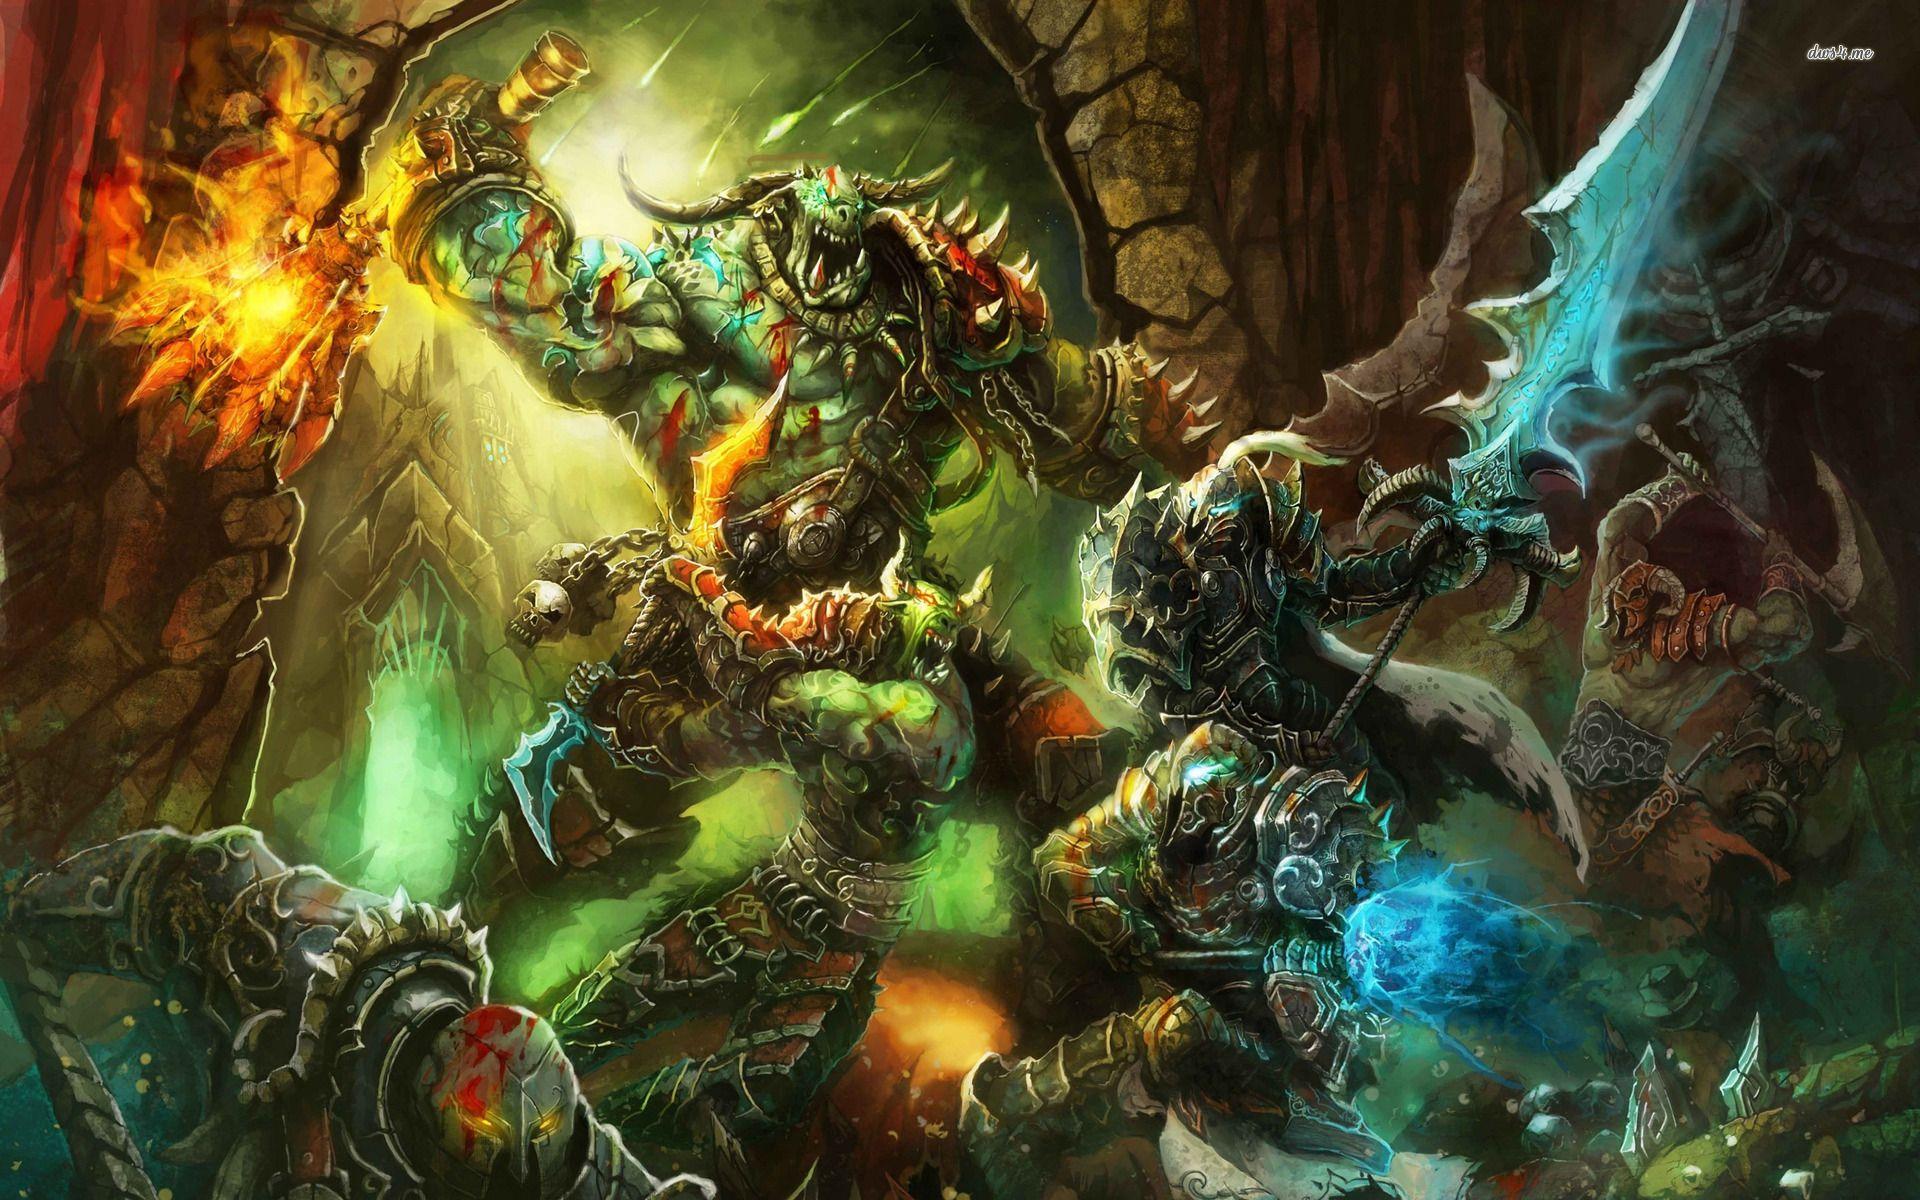 World Of Warcraft Background and Image (46)